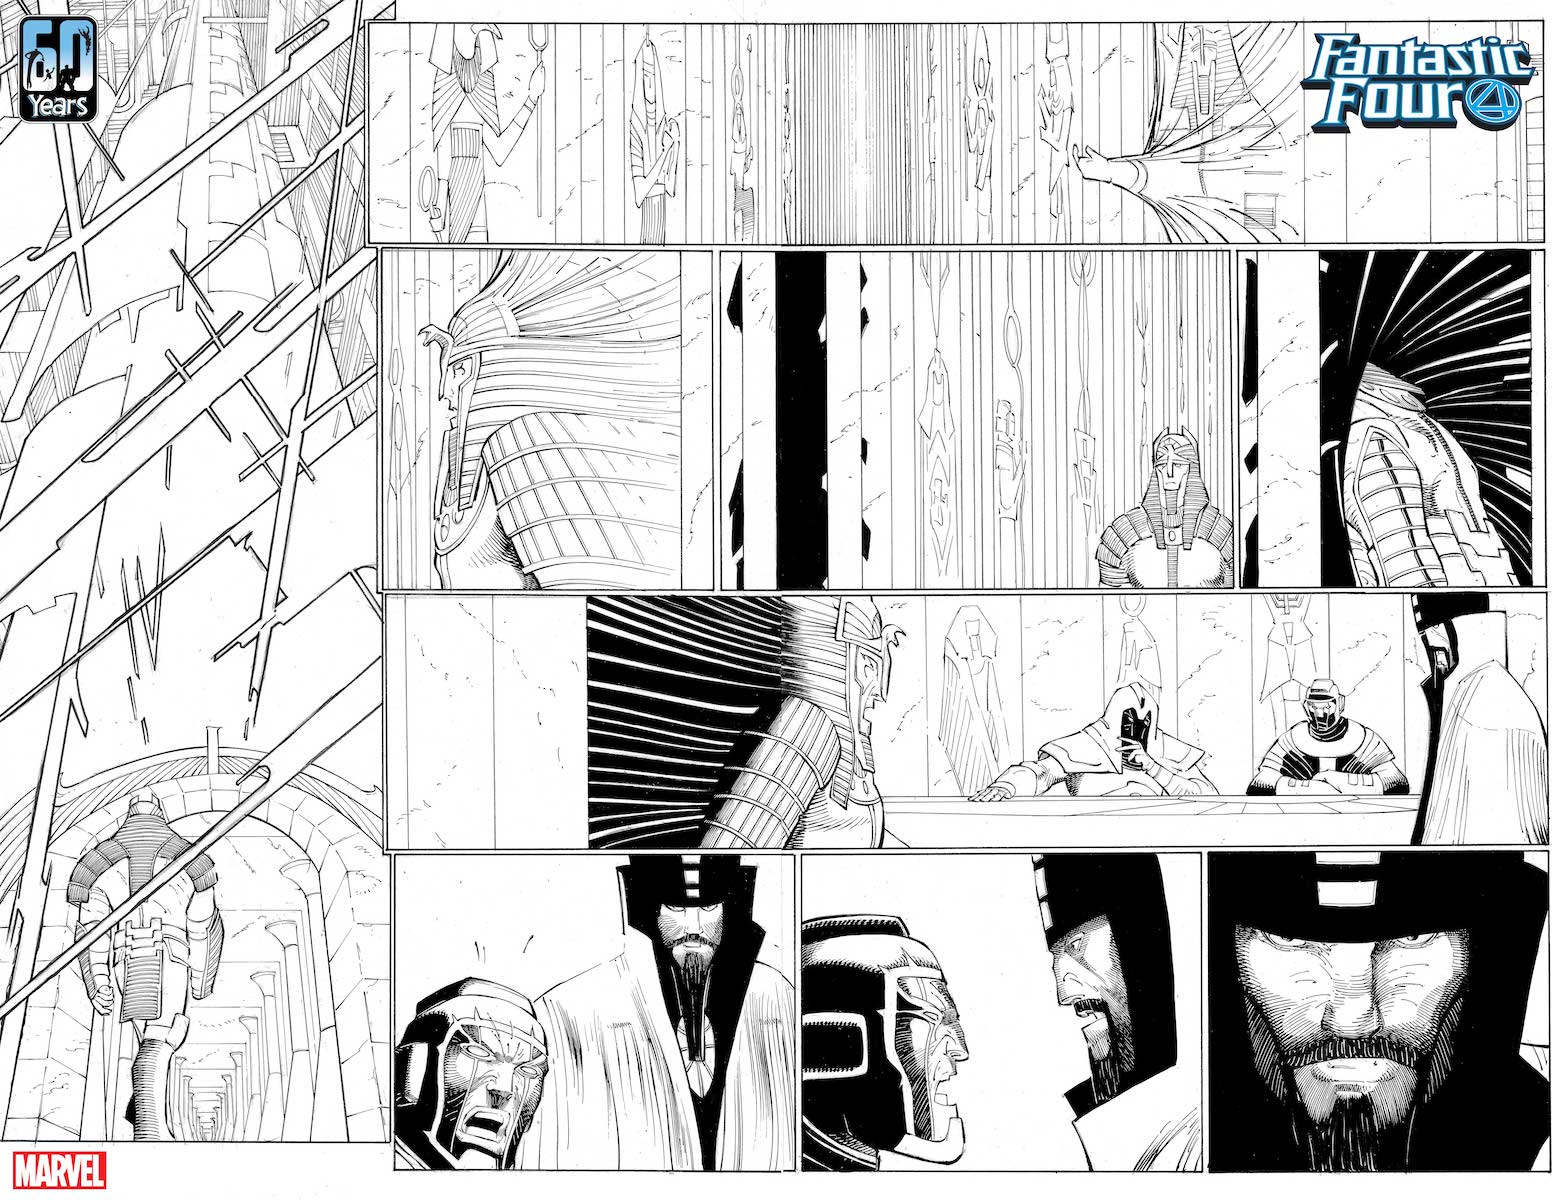 Fantastic Four #35 Page 1 (Art by John Romita Jr.)